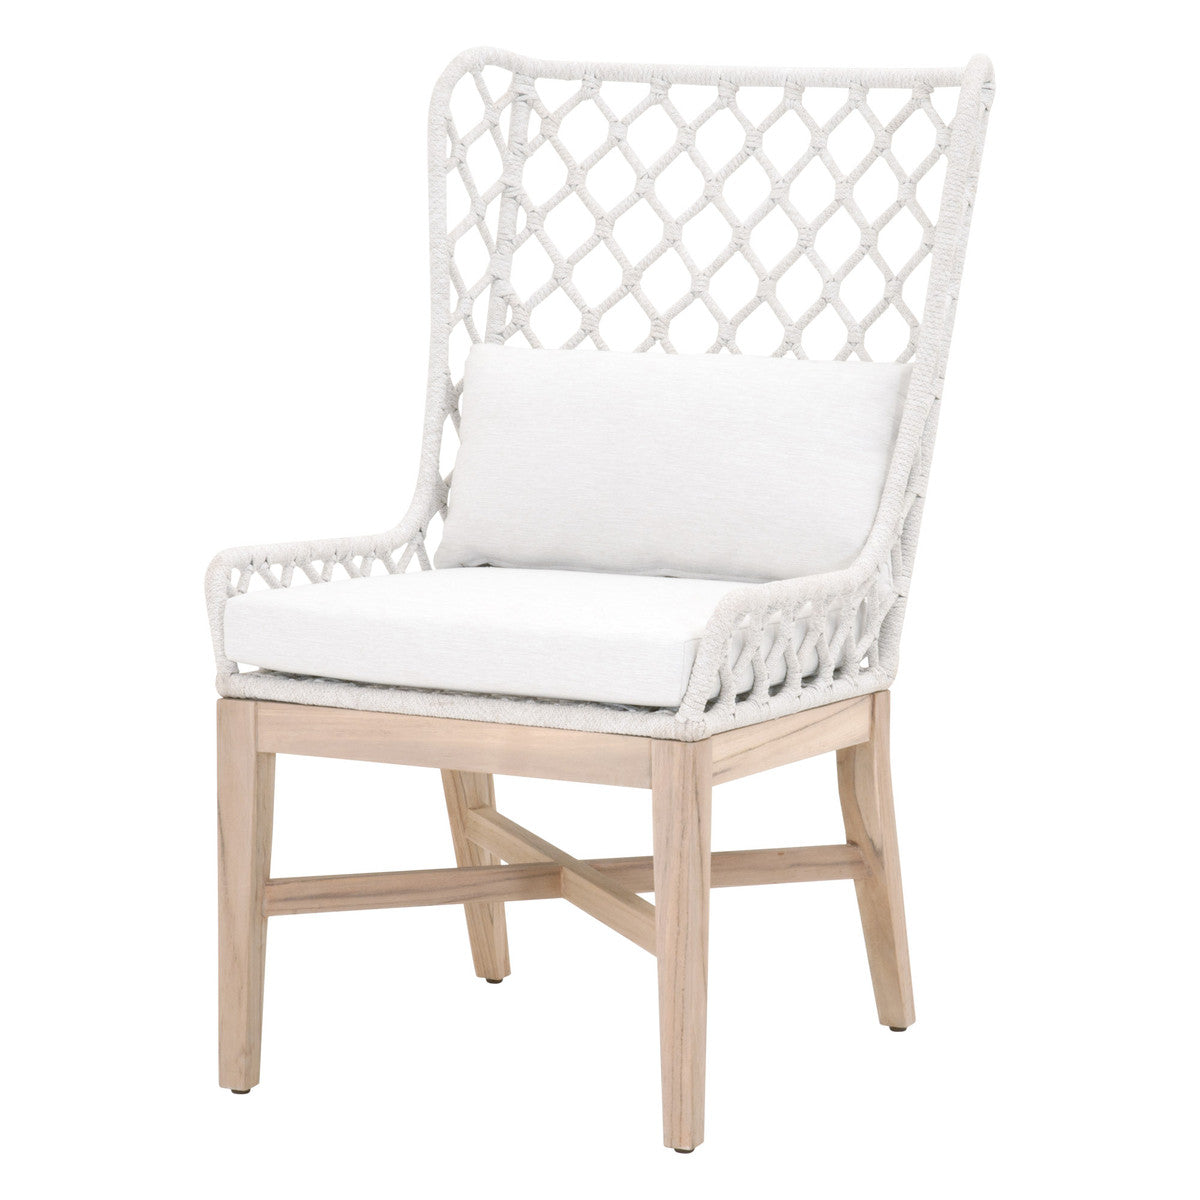 Lattice Outdoor Wing Chair